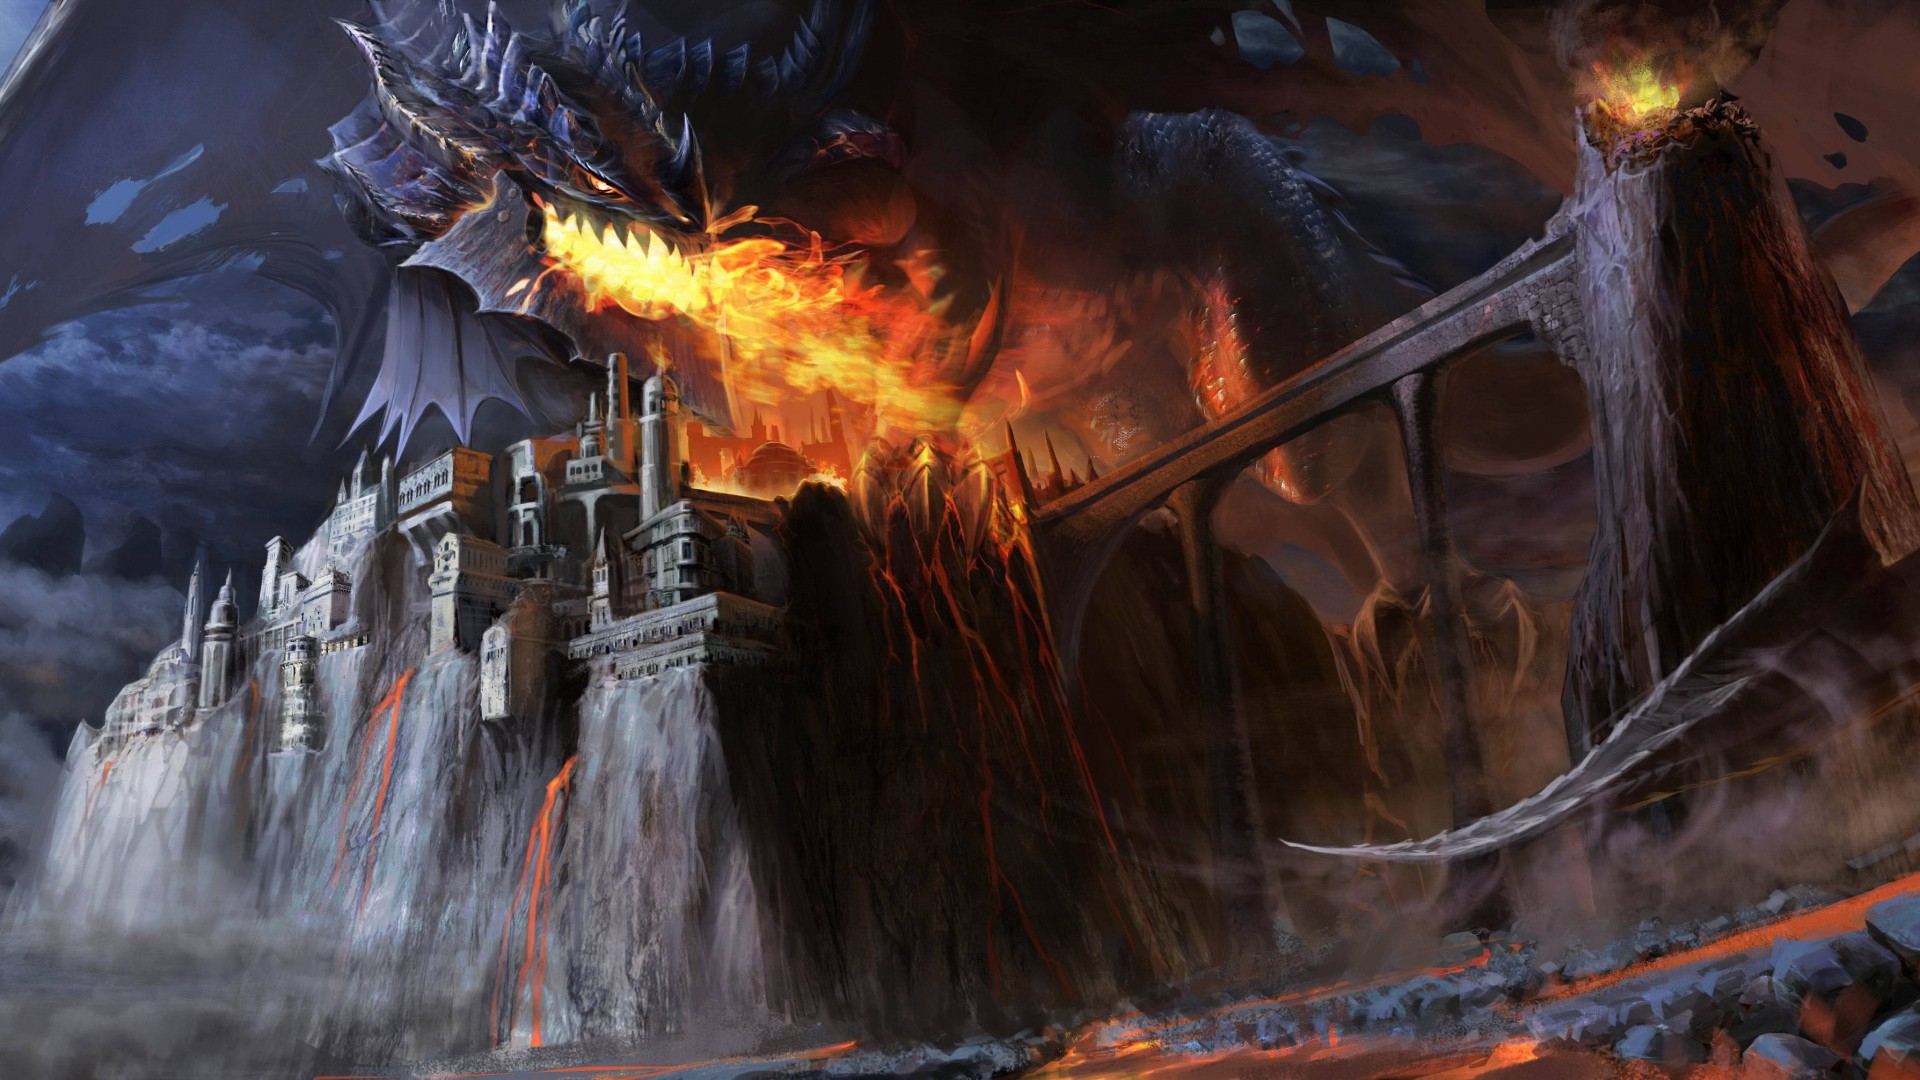 дракон, черный, огонь, замок, мост, лава, дым, фентези, арт, Dragon, black, fire, castle, bridge, lava, smoke, fantasy, art (horizontal)